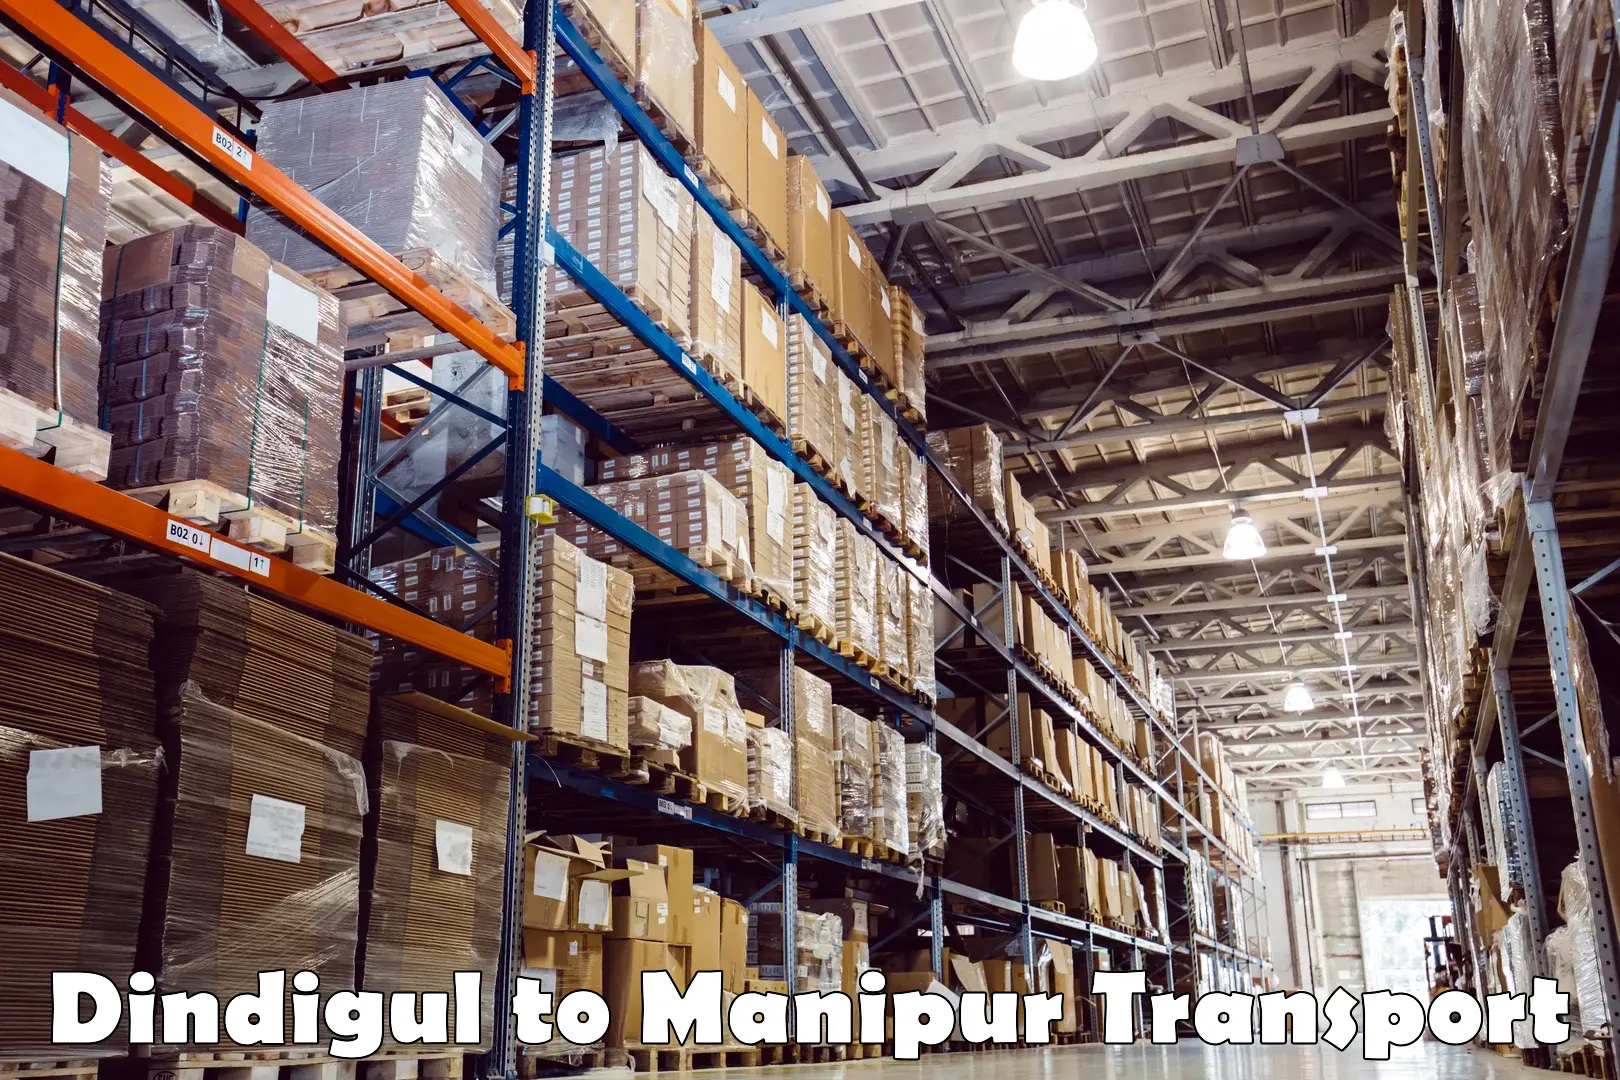 Transport in sharing Dindigul to Manipur